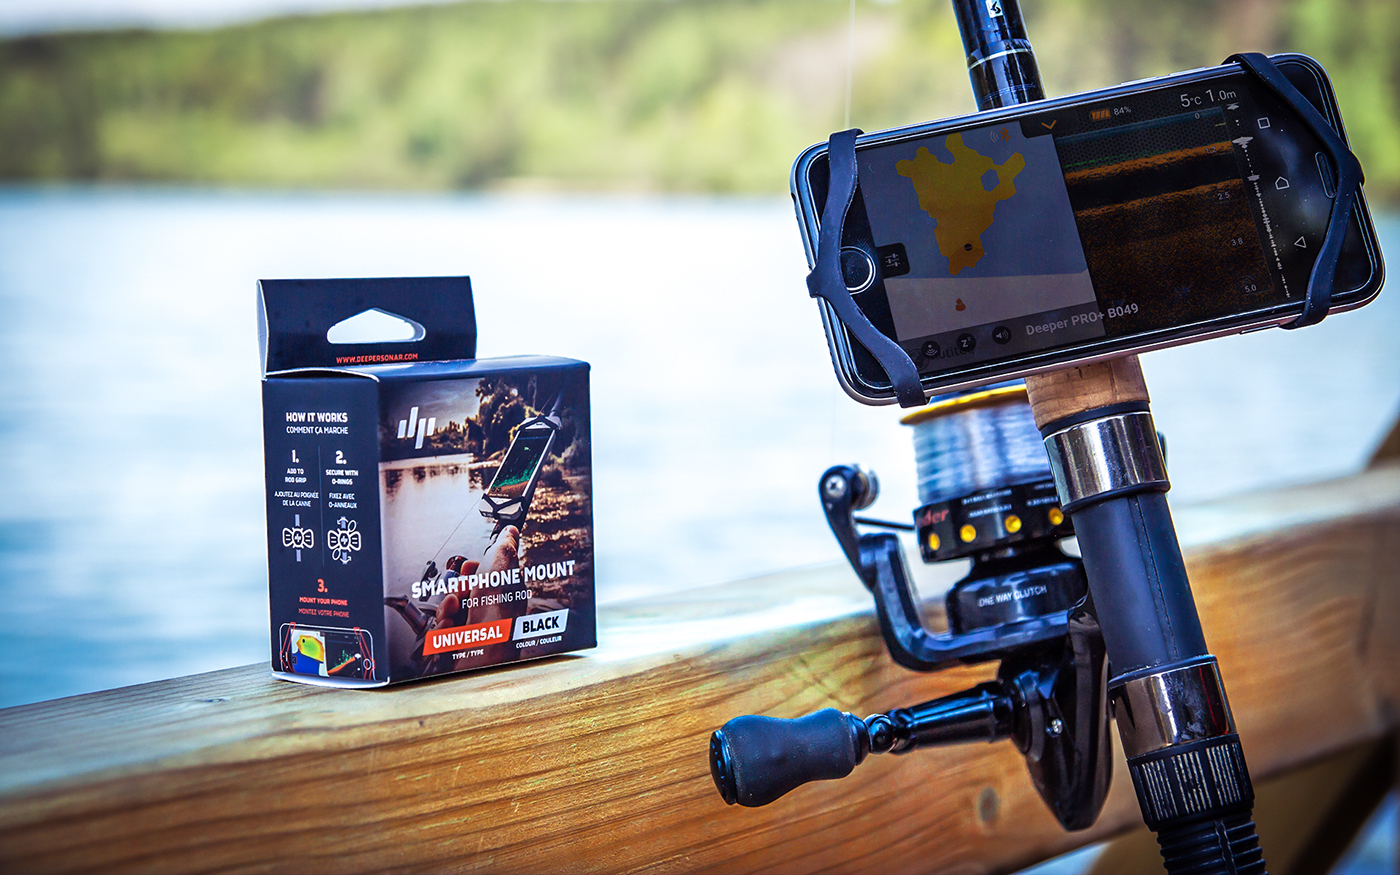 deeper smart sonnar Smart Fishfinder challenge Packaging fish fishing wireless